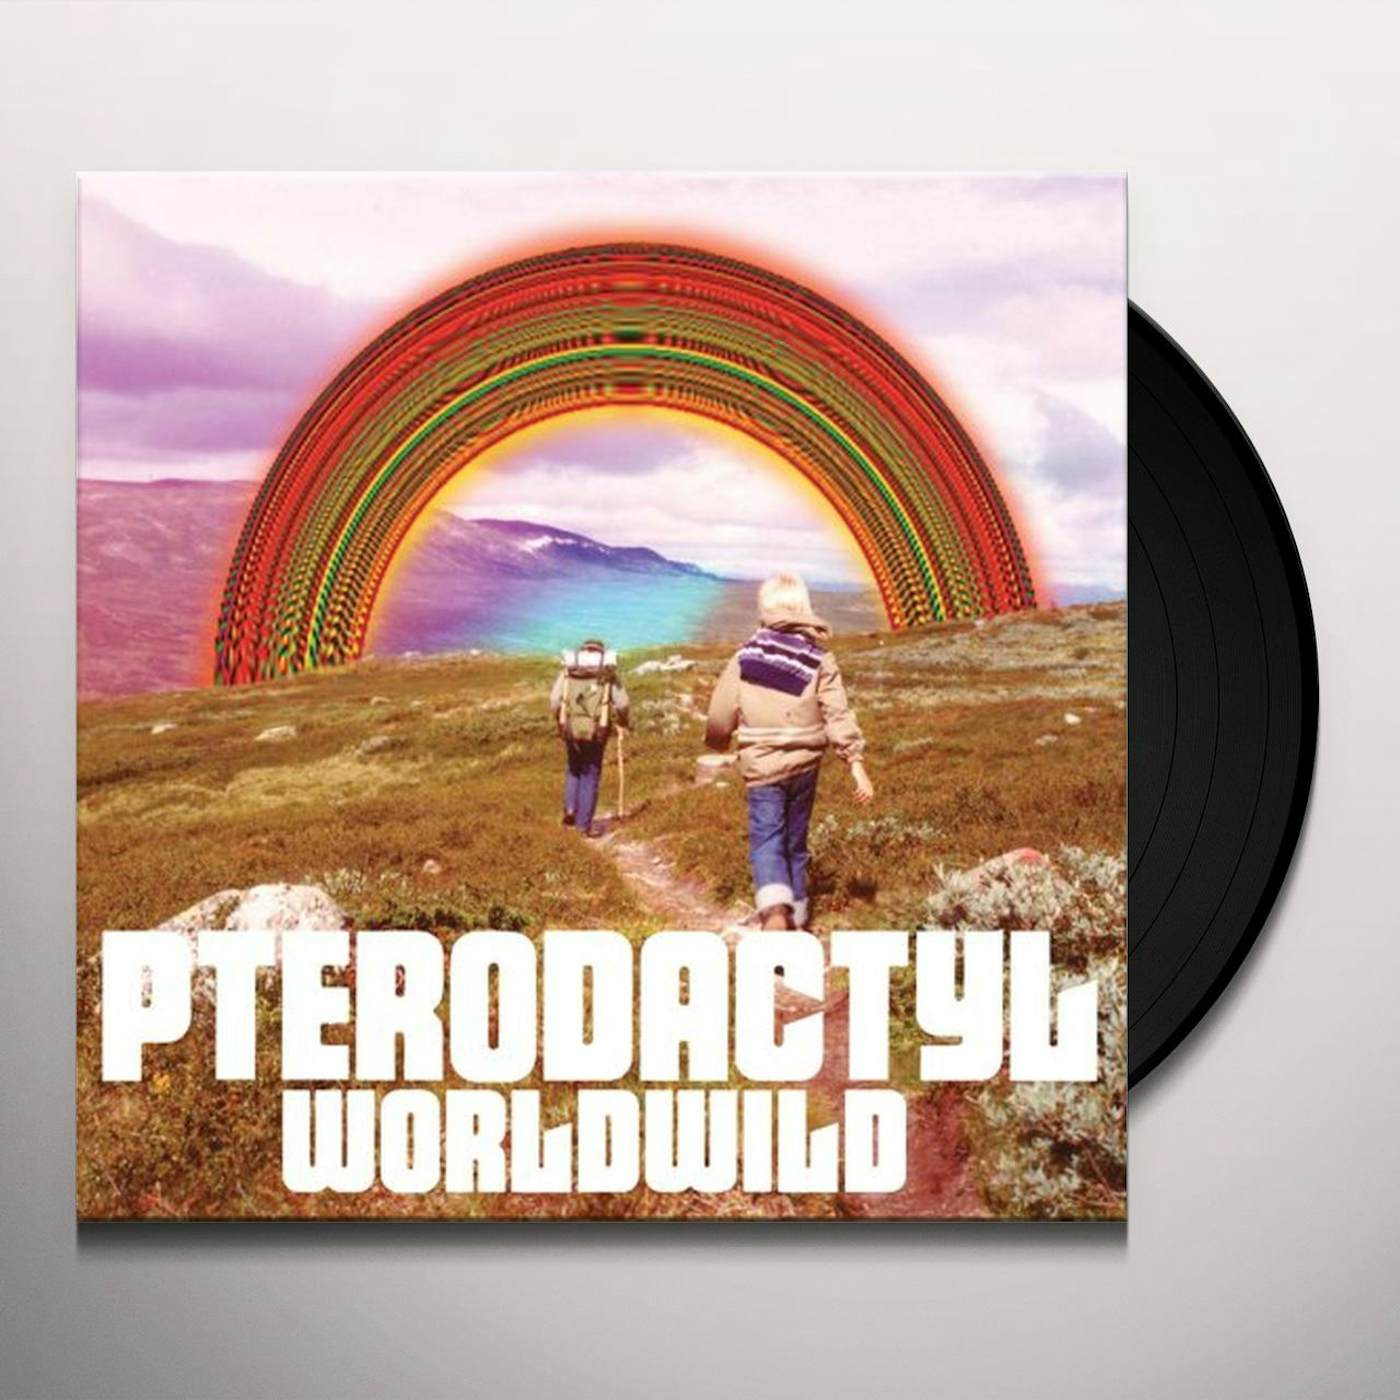 Pterodactyl Worldwild Vinyl Record